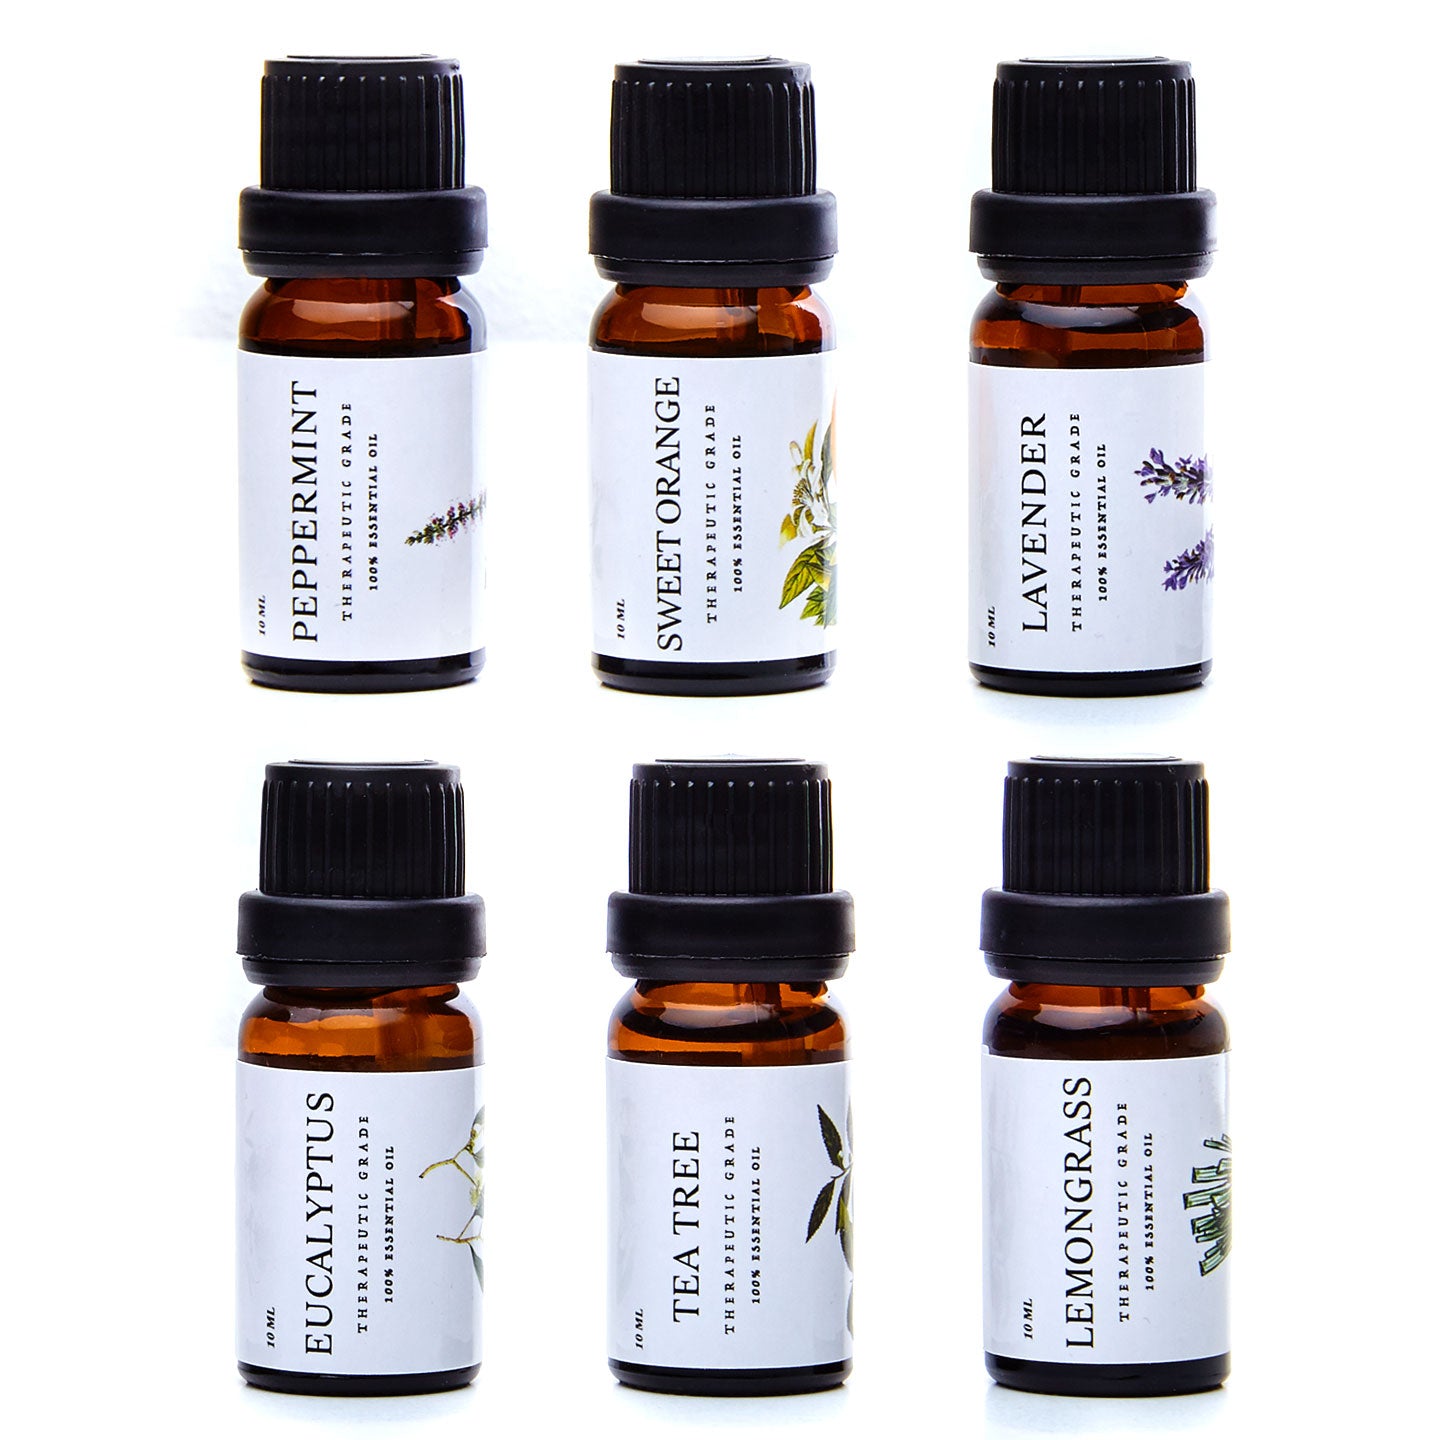 PURE Essentials Oils - Top 6 Aromatherapy Oils in 1 Box (10 Ml)